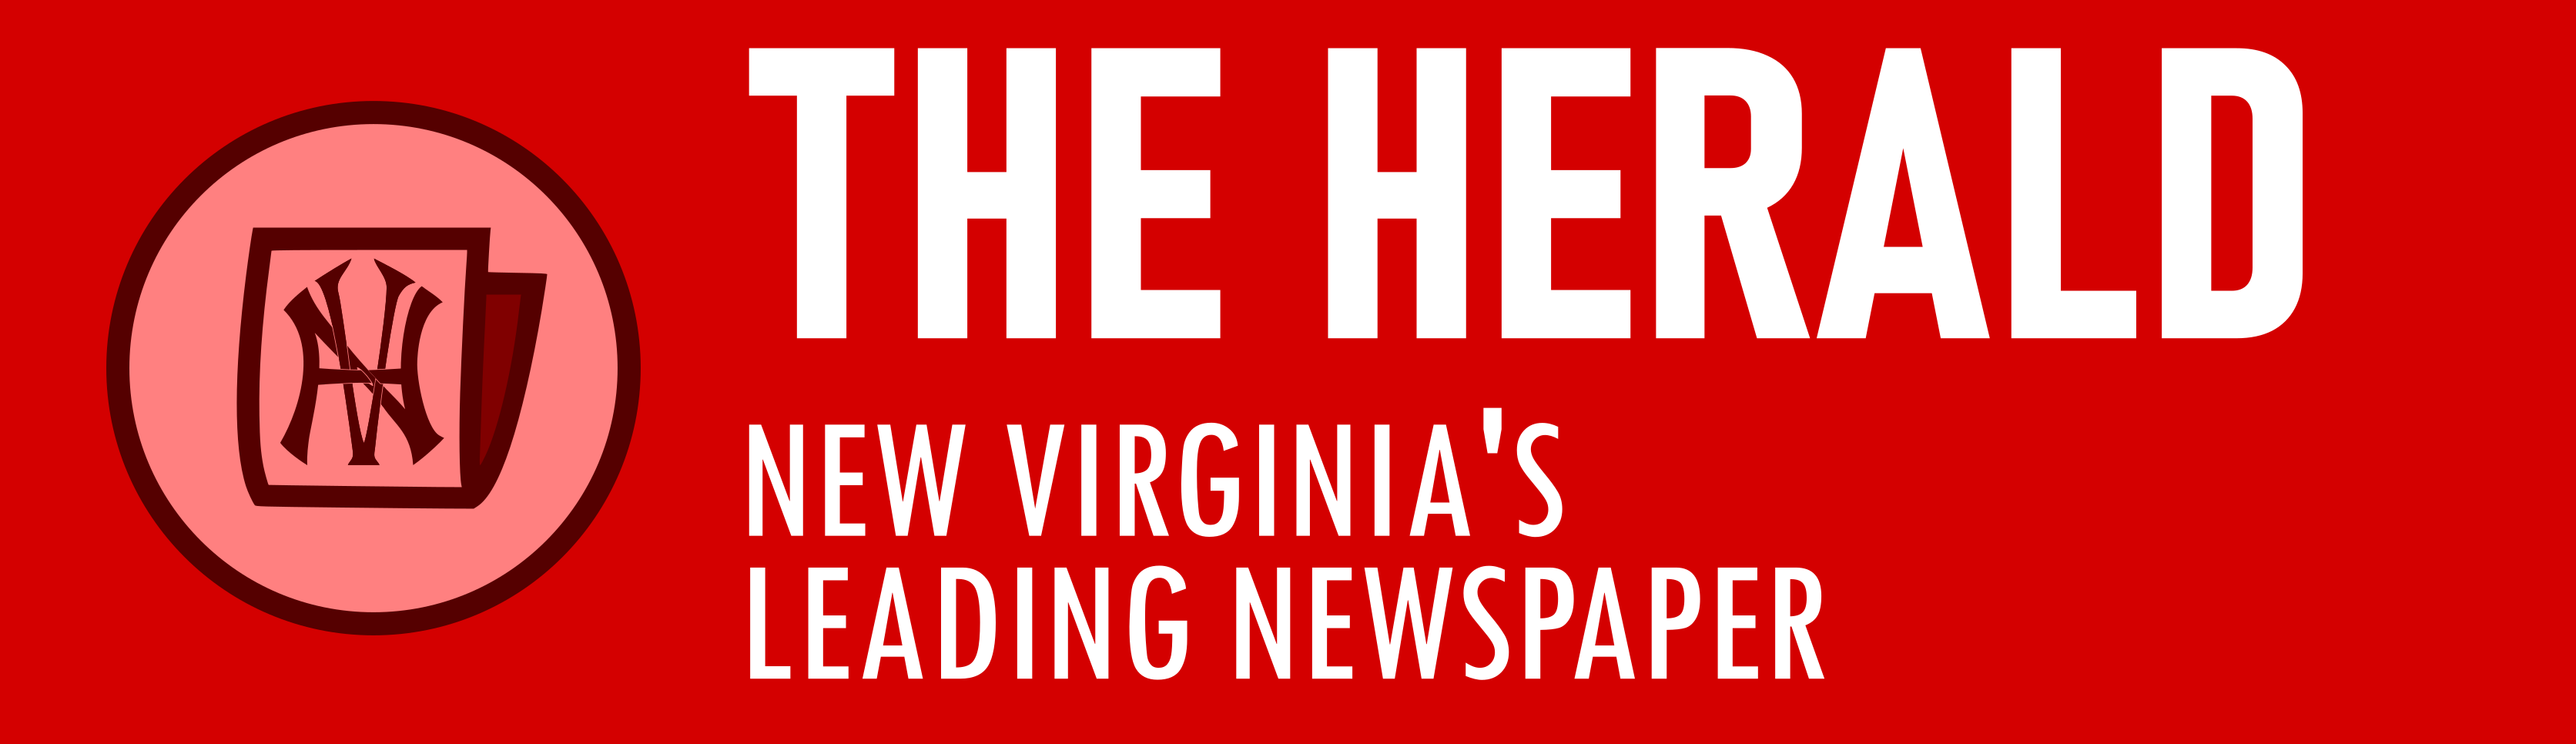 The New Virginian Herald